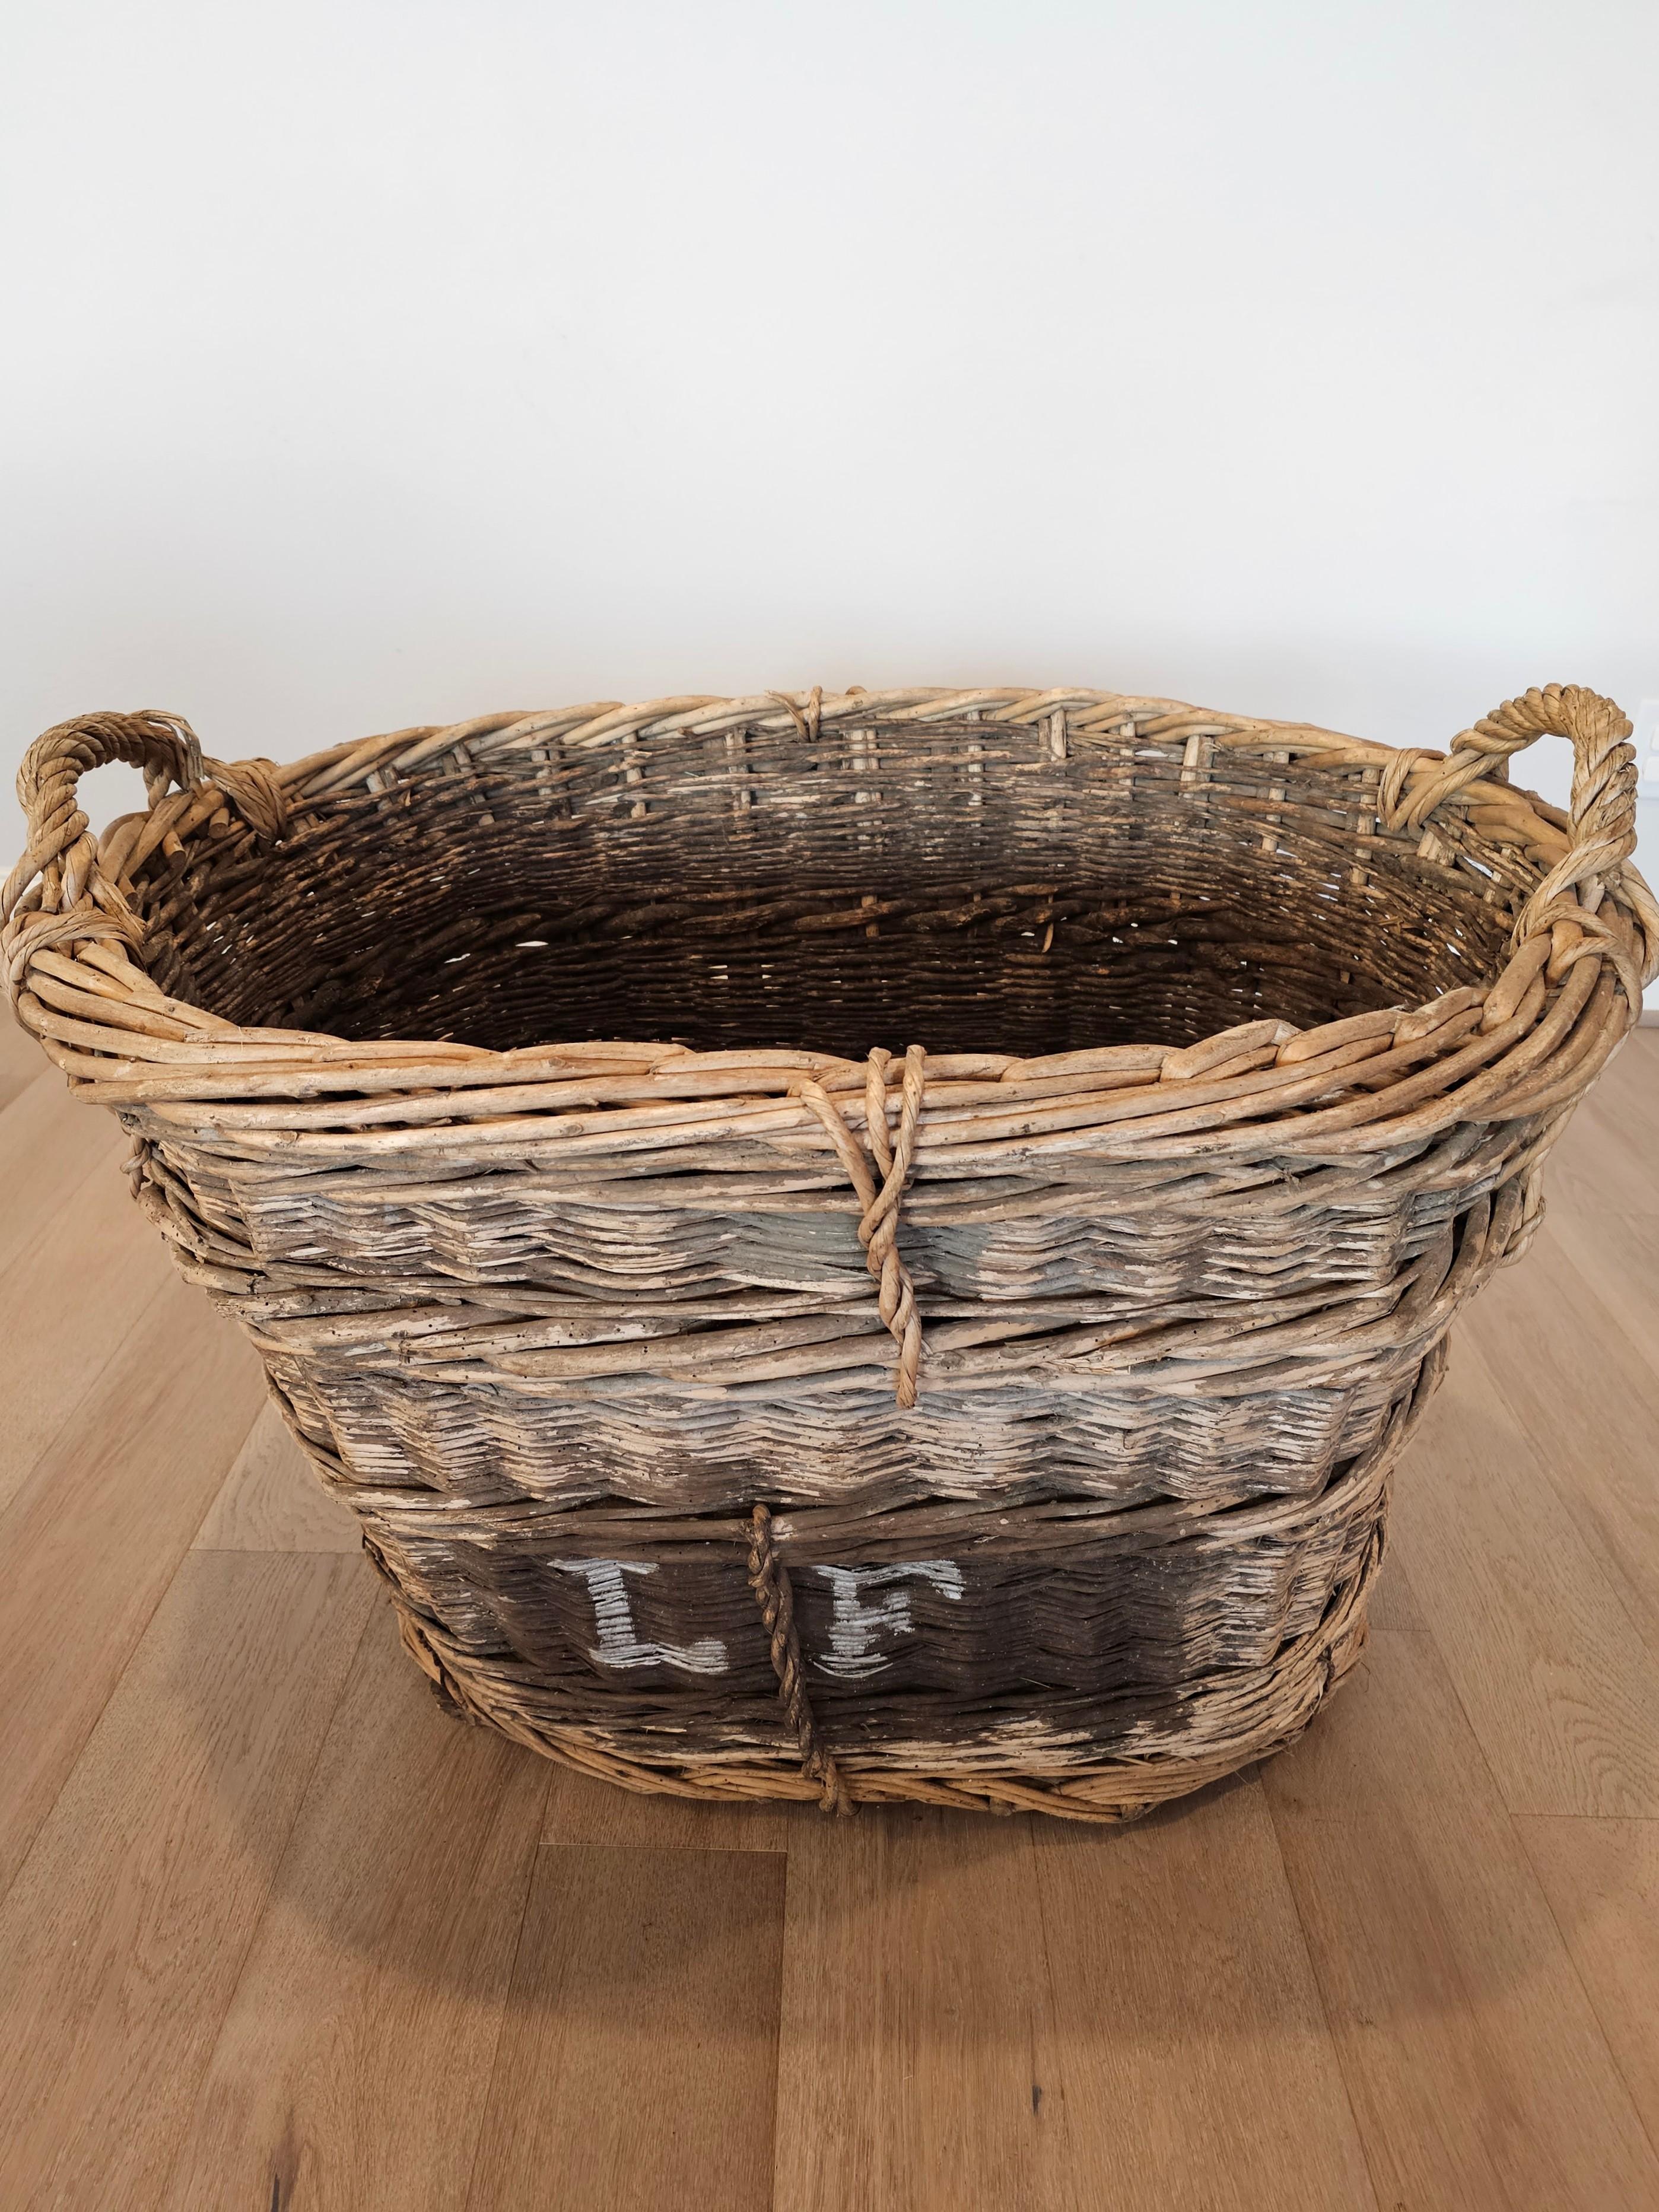 Monumental Antique French Vineyard Grape Harvesting Wicker Basket 4